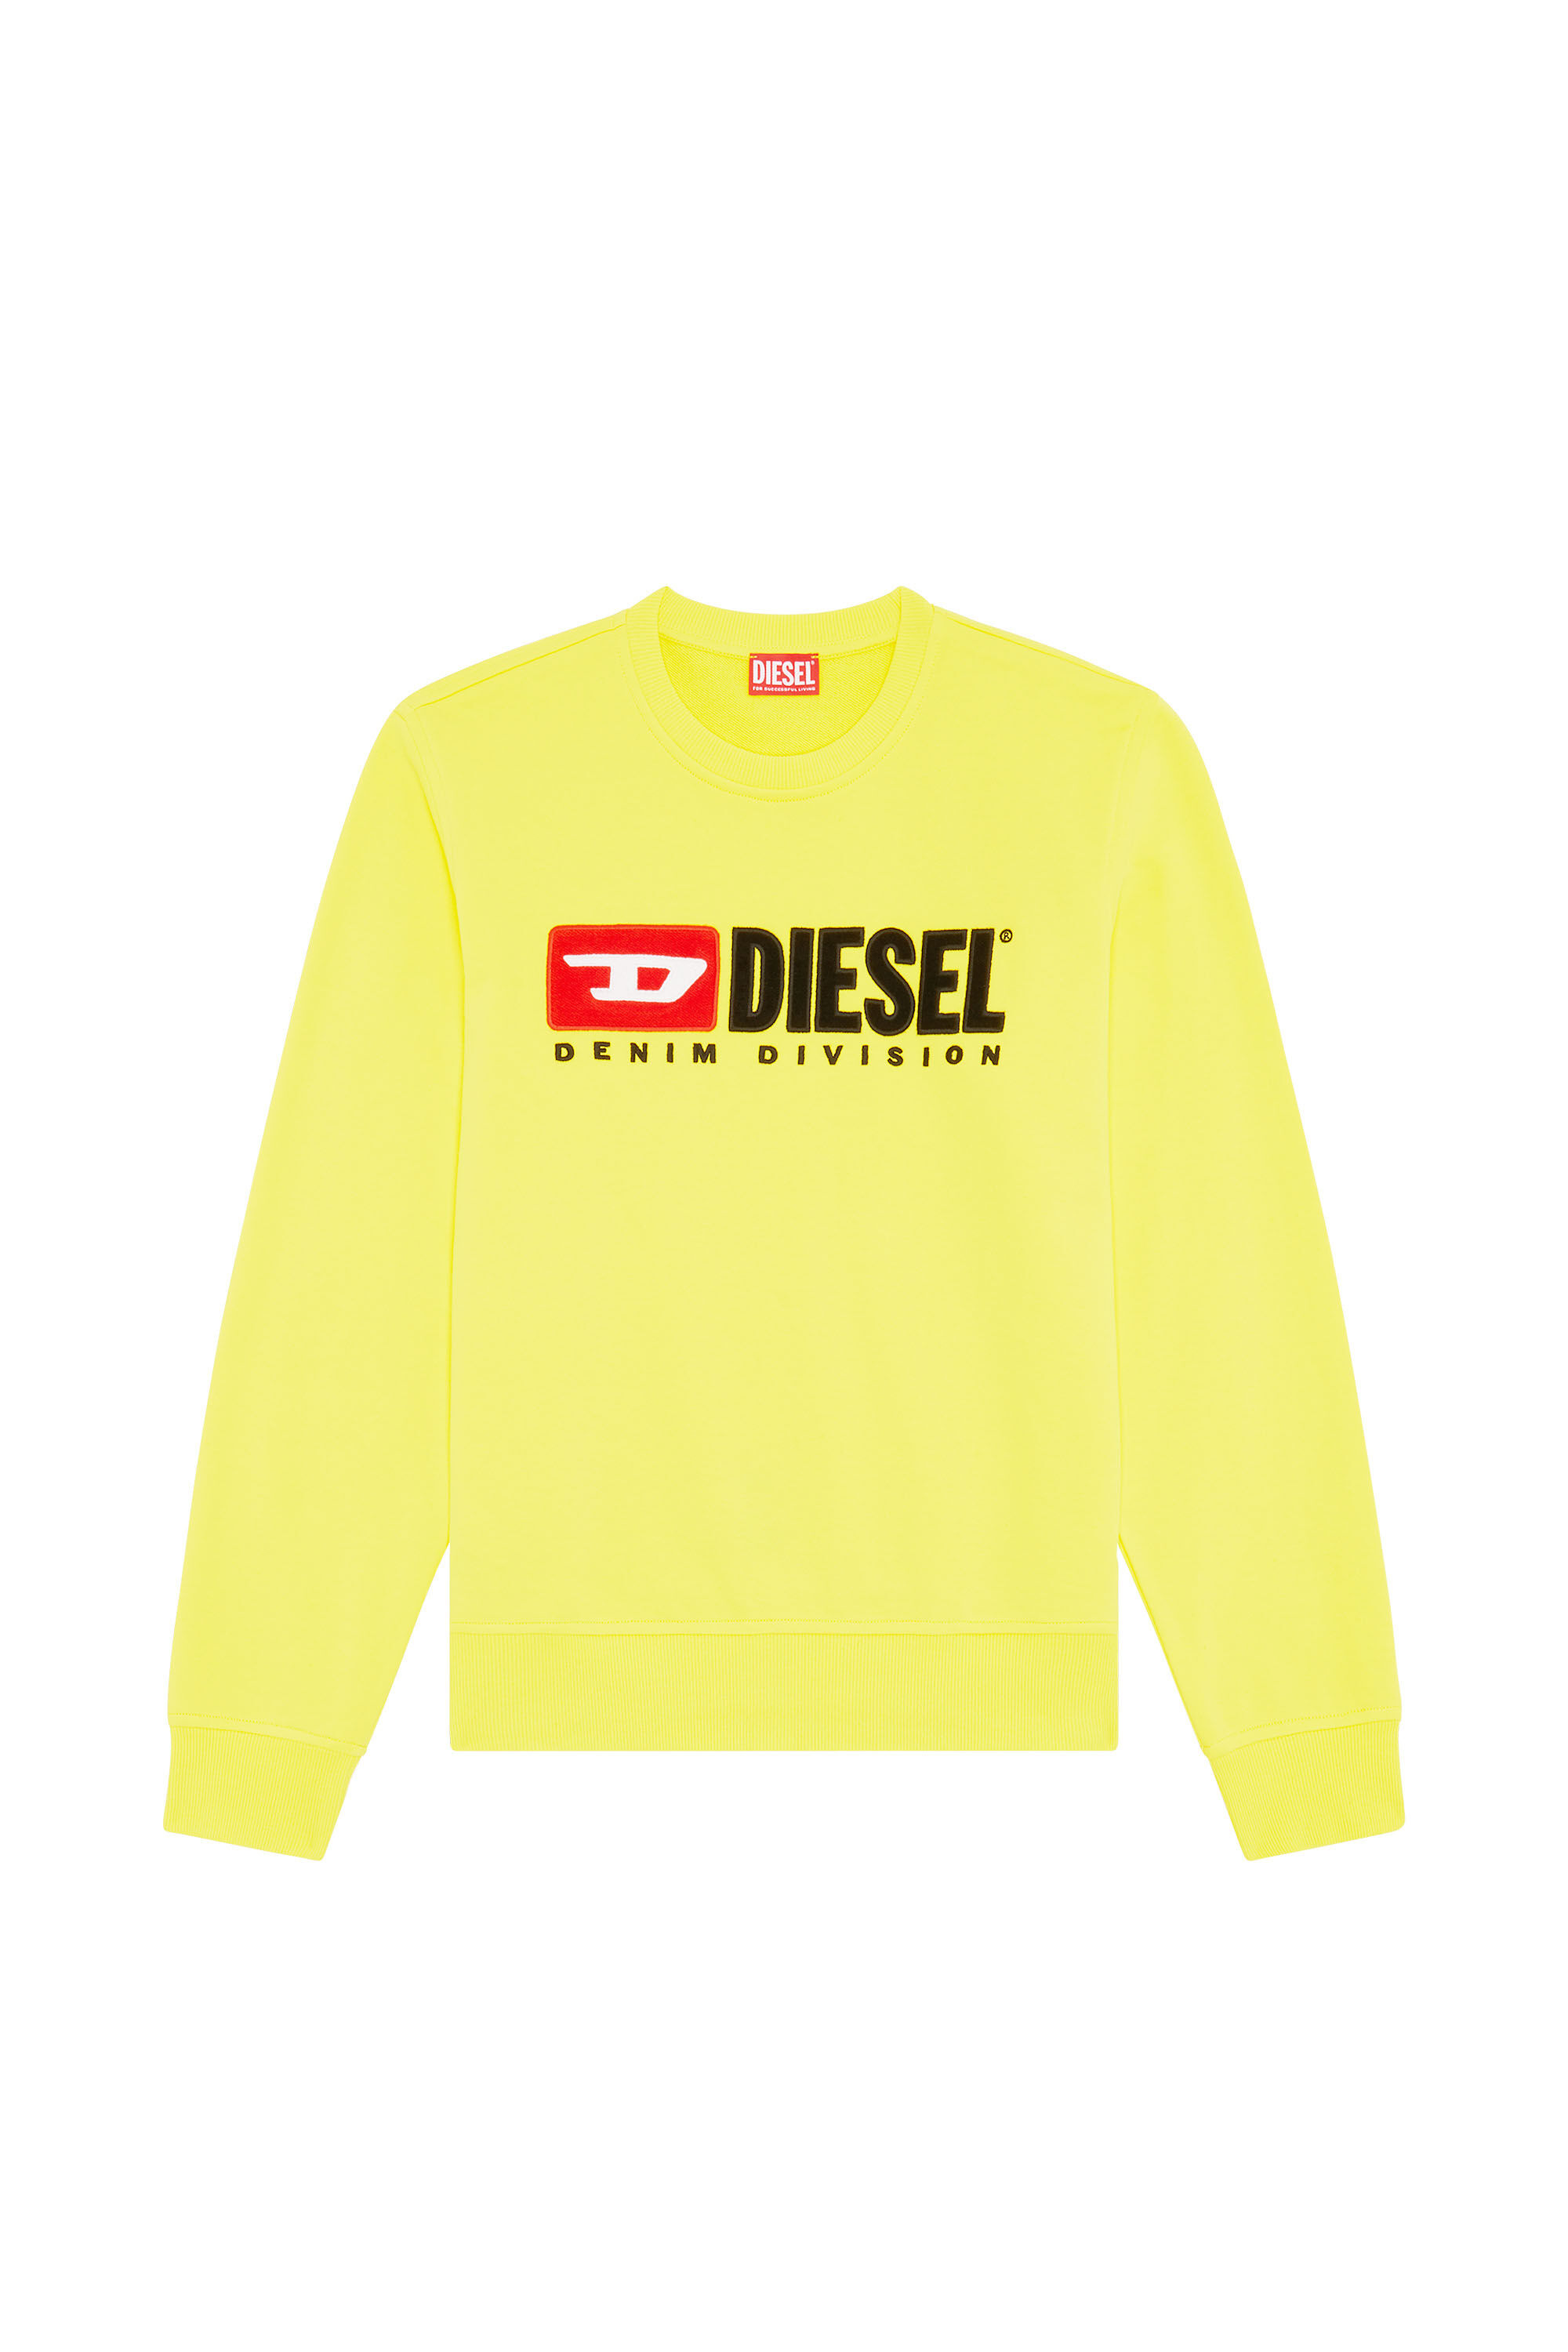 Diesel - S-GINN-DIV, Yellow Fluo - Image 2